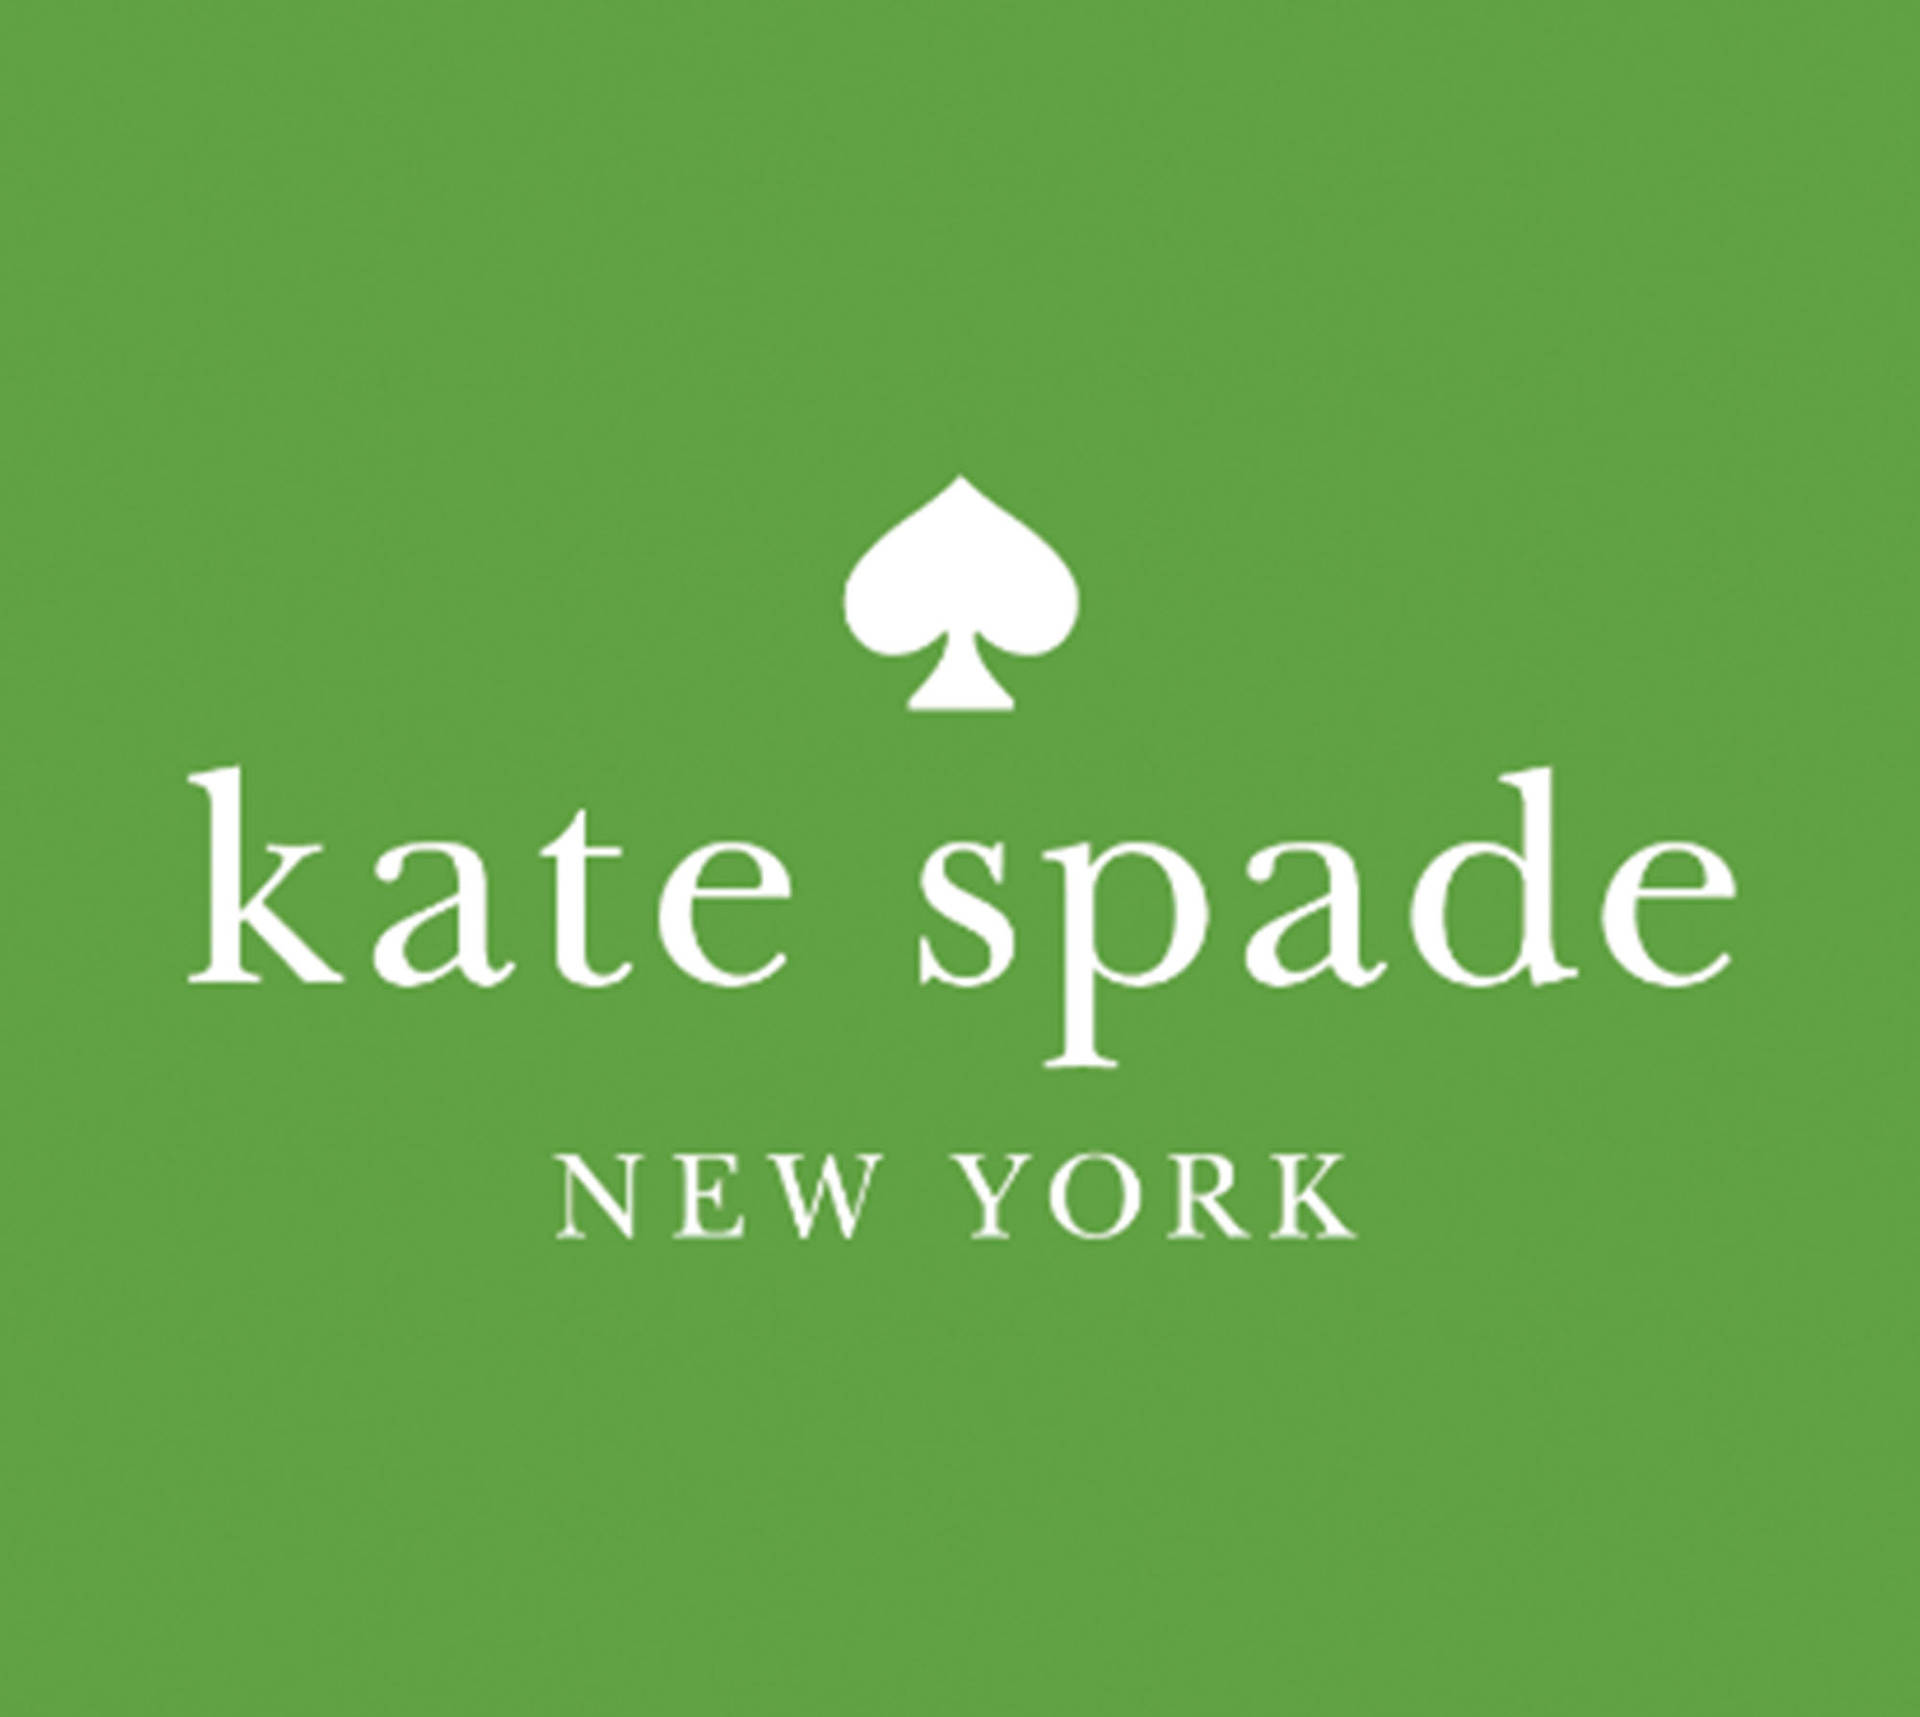 Download Kate Spade New York Green Poster Wallpaper